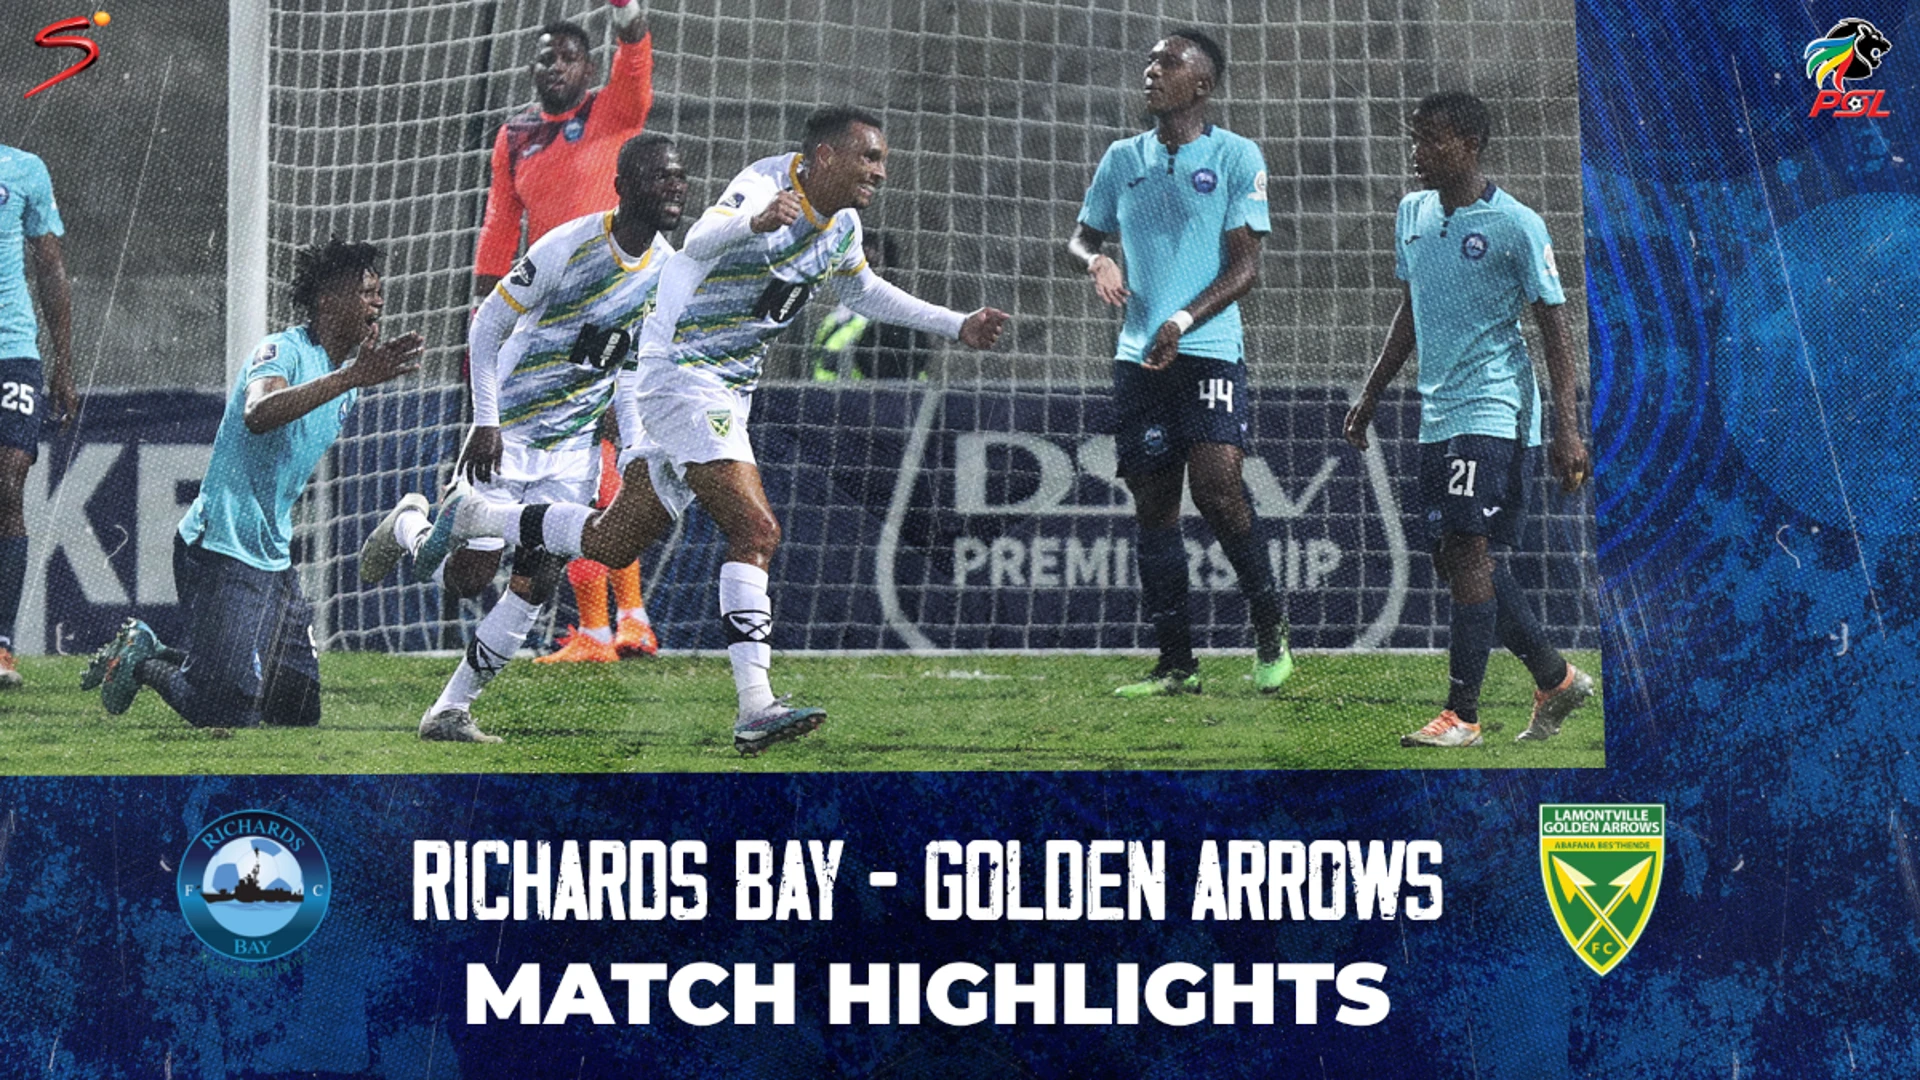 Richards Bay v Golden Arrows | Match in 5 Minutes | DStv Premiership | Highlights